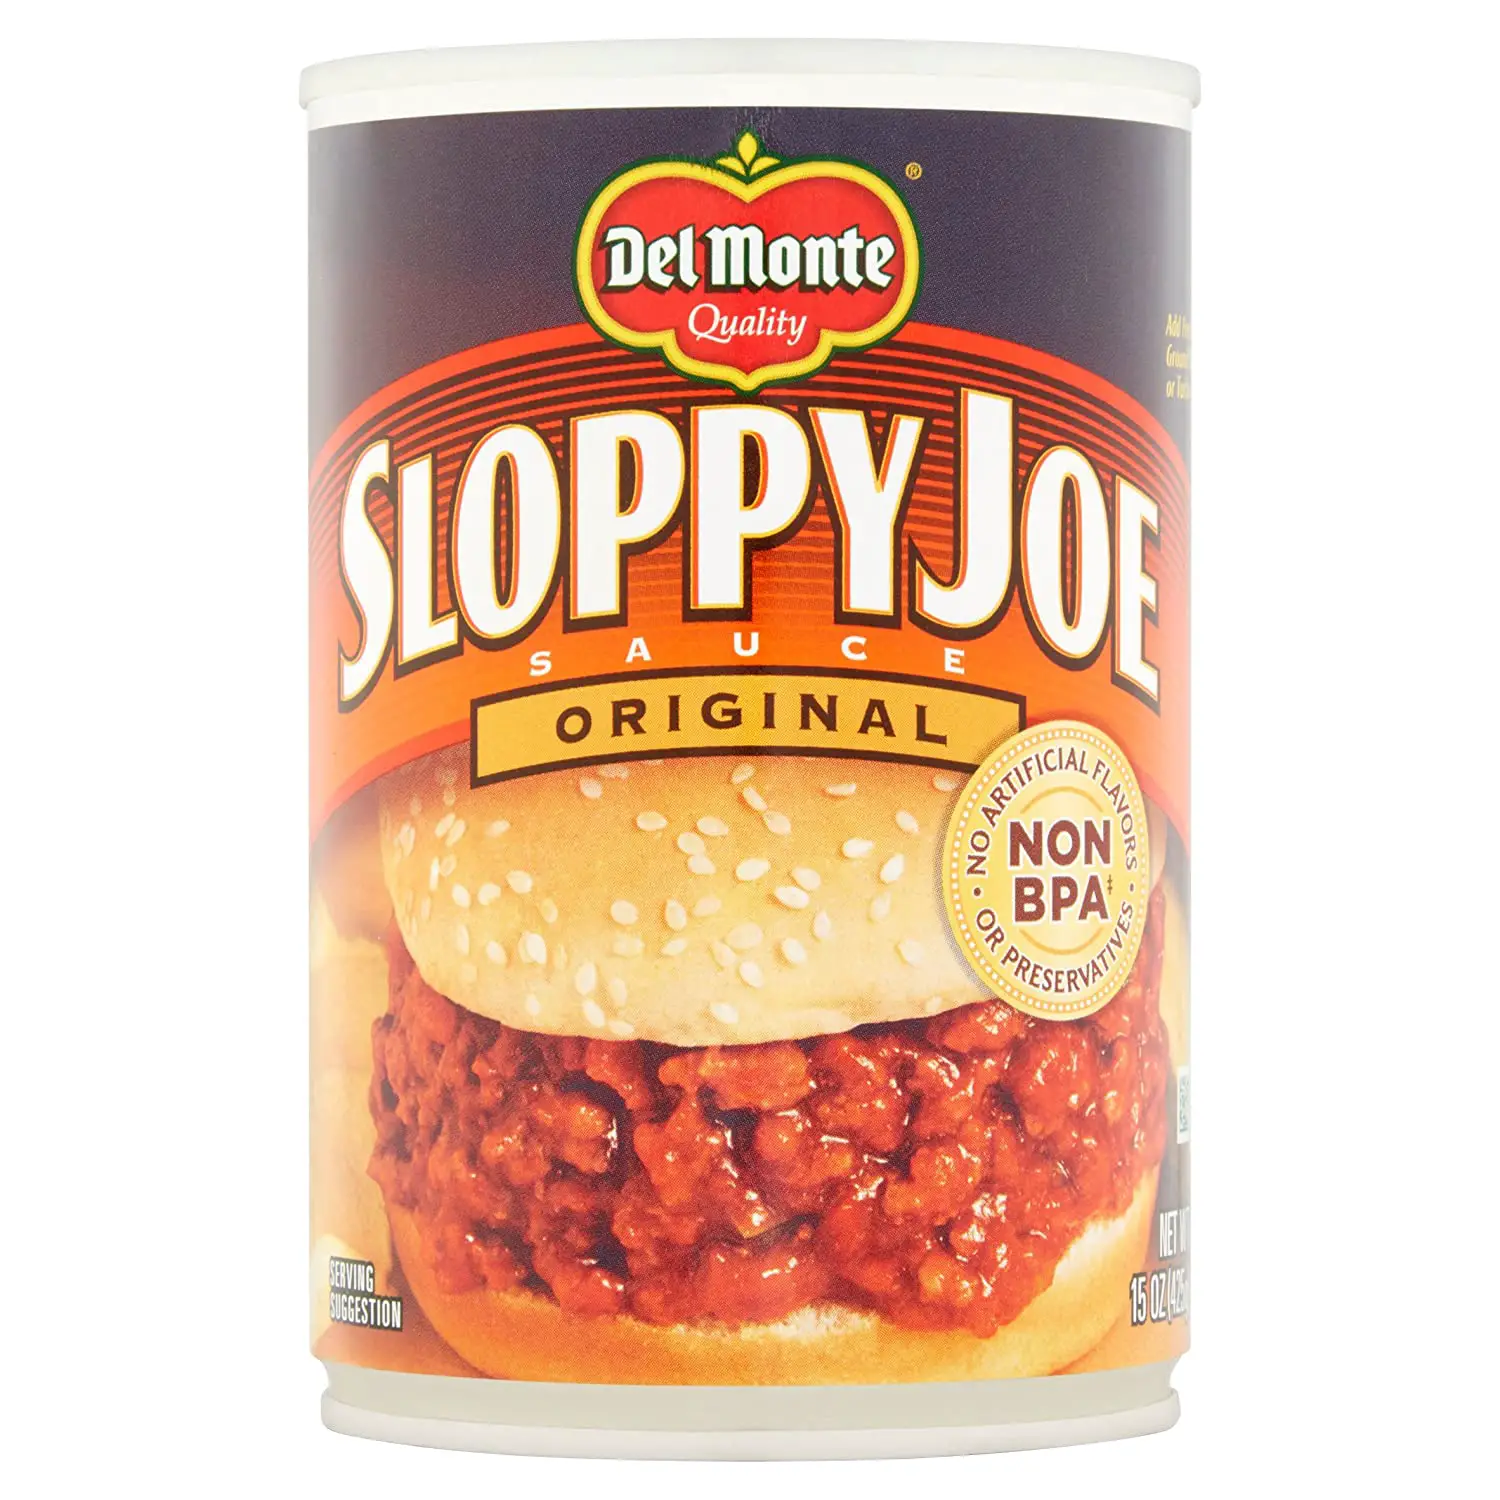 Del Monte Sloppy Joe Sauce Original 15 Oz (Pack of 6)